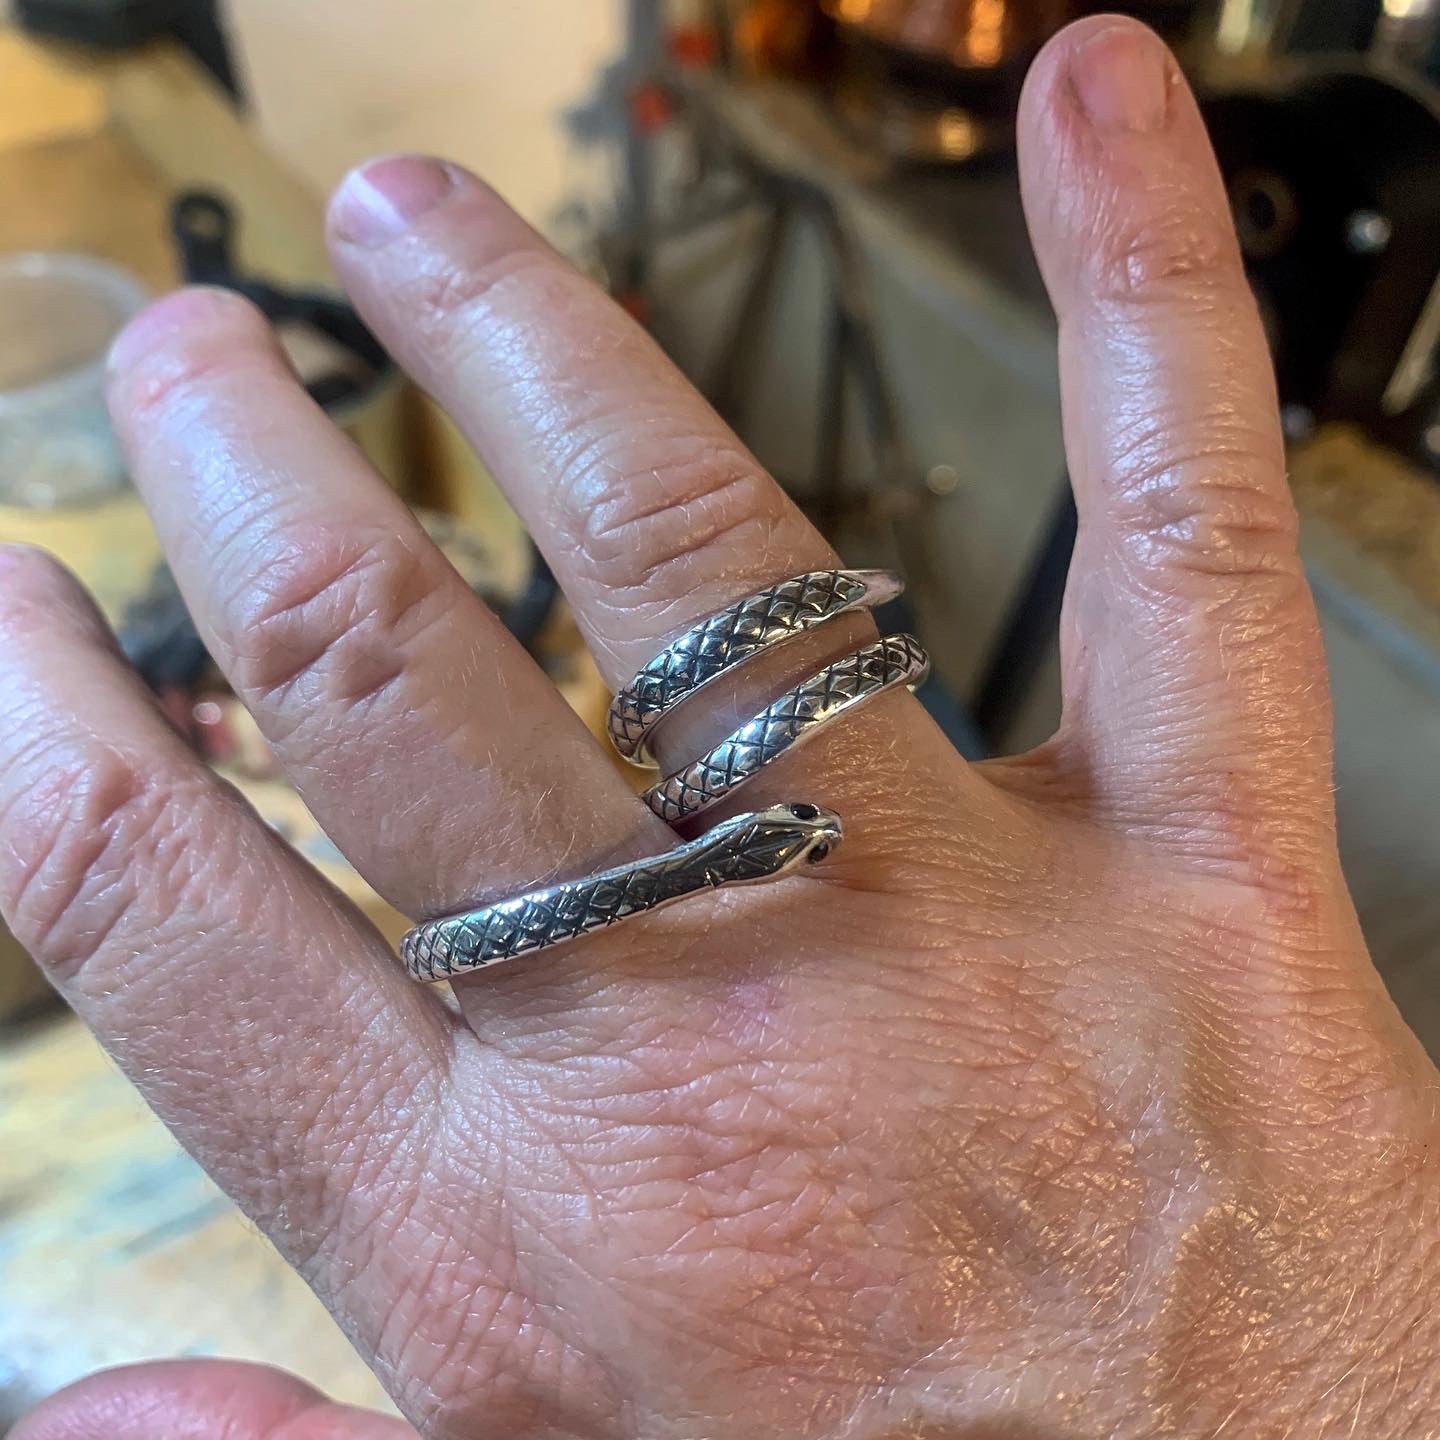 2 finger snake ring, double finger snake ring, scales, scales ring